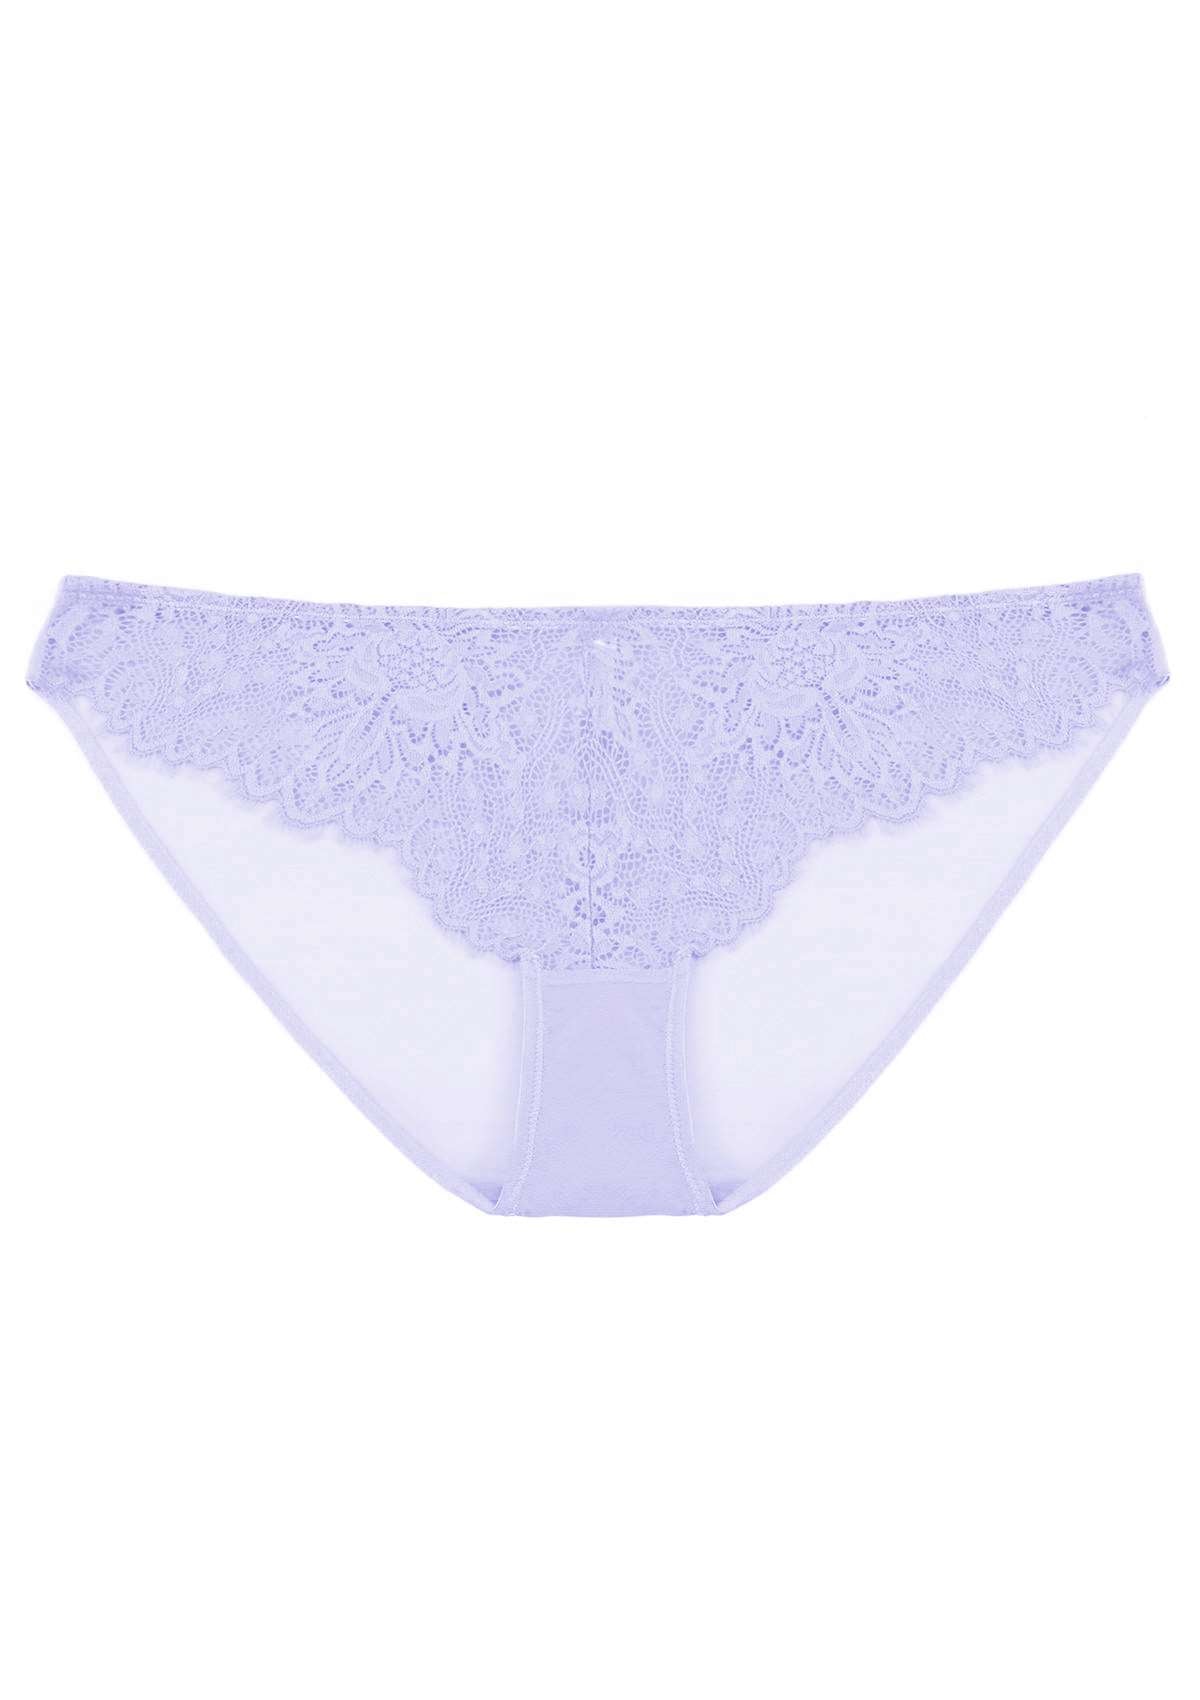 HSIA Sunflower Exquisite Purple Lace Bikini Underwear - L / Purple